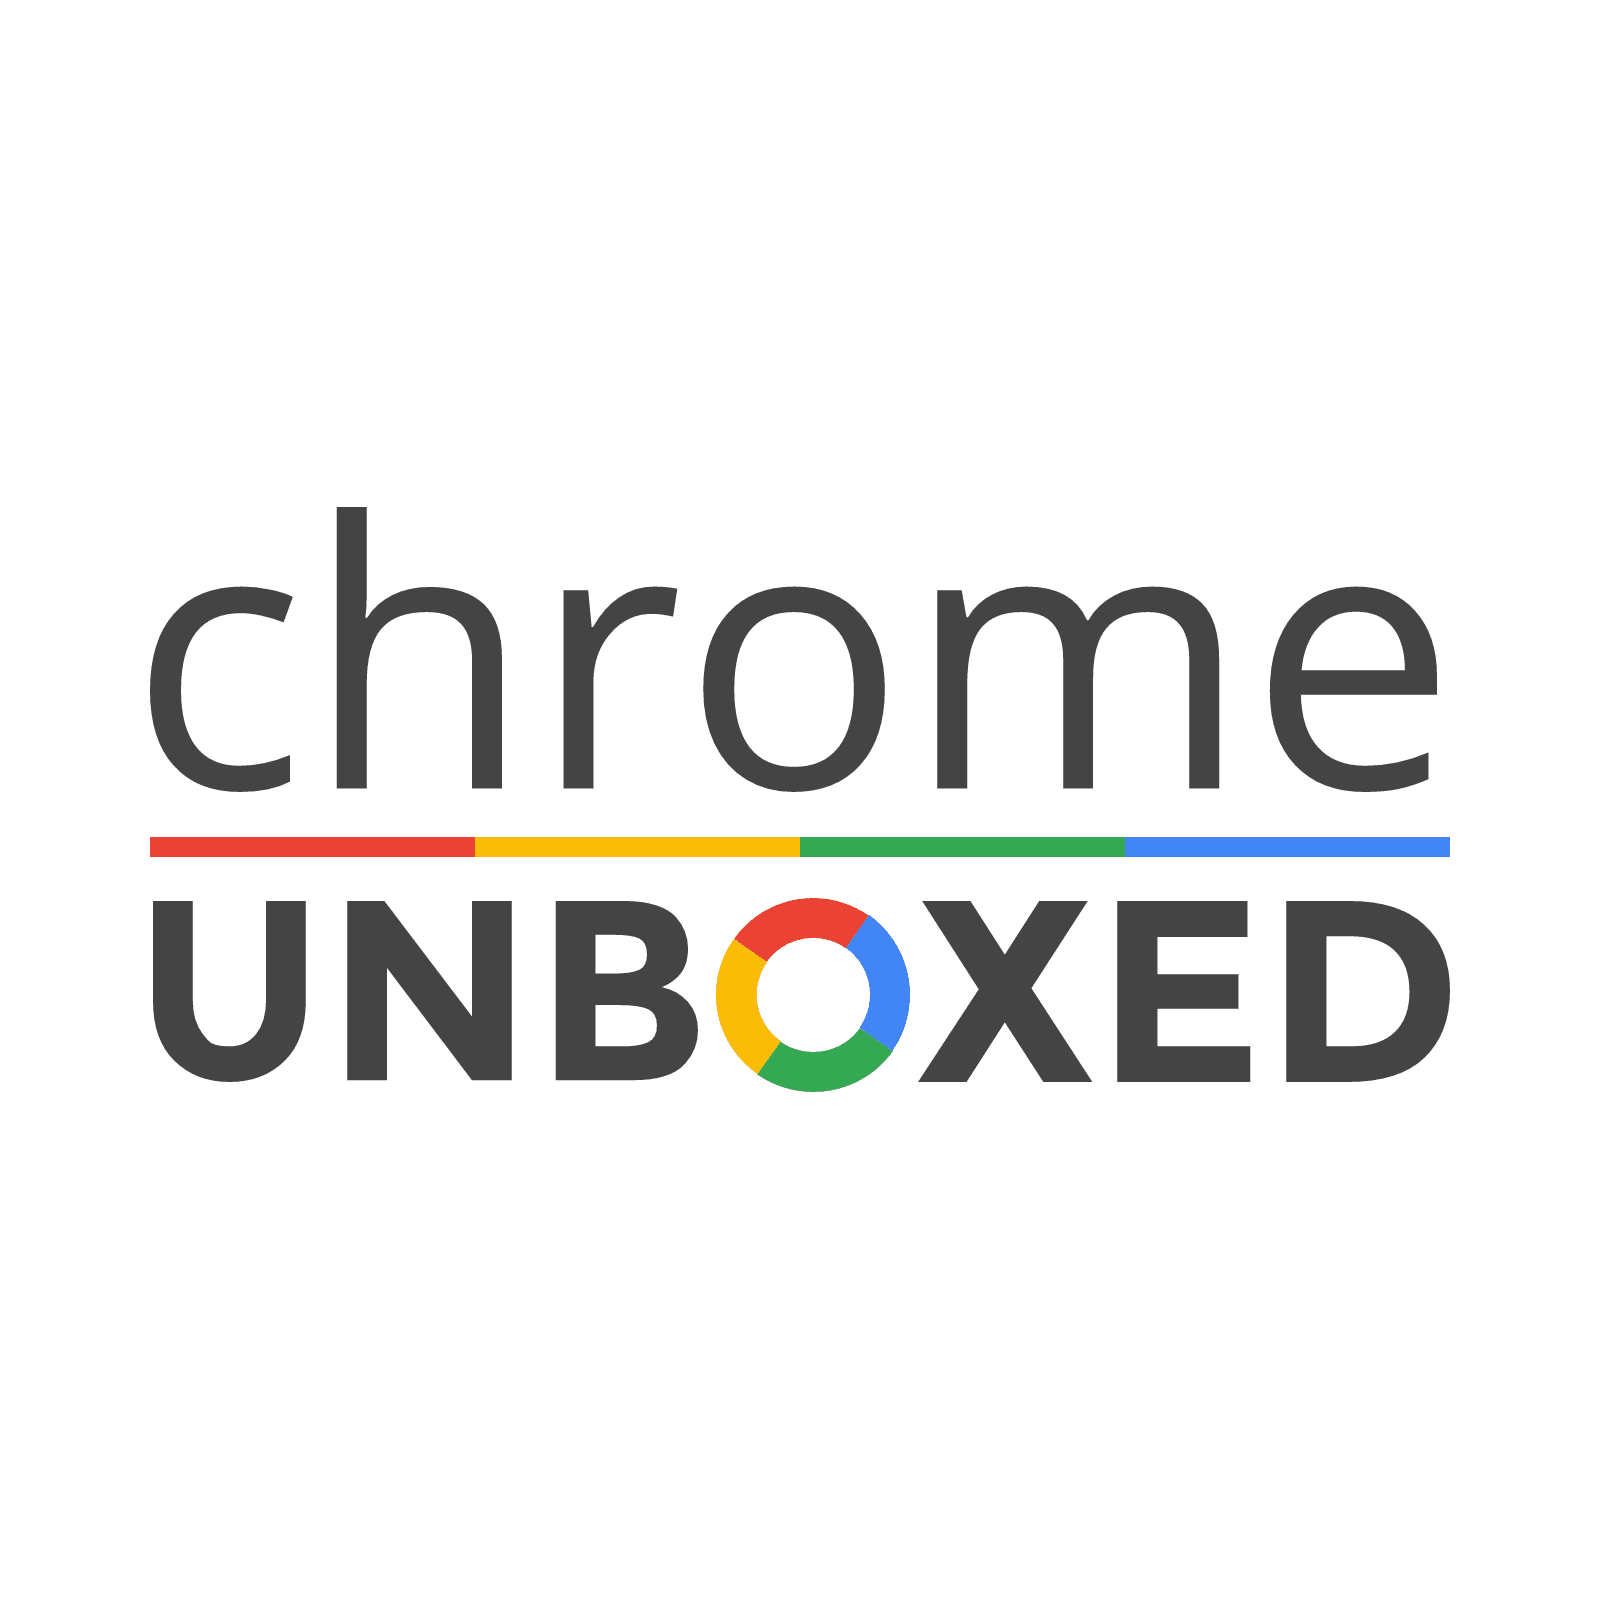 chrome unboxed